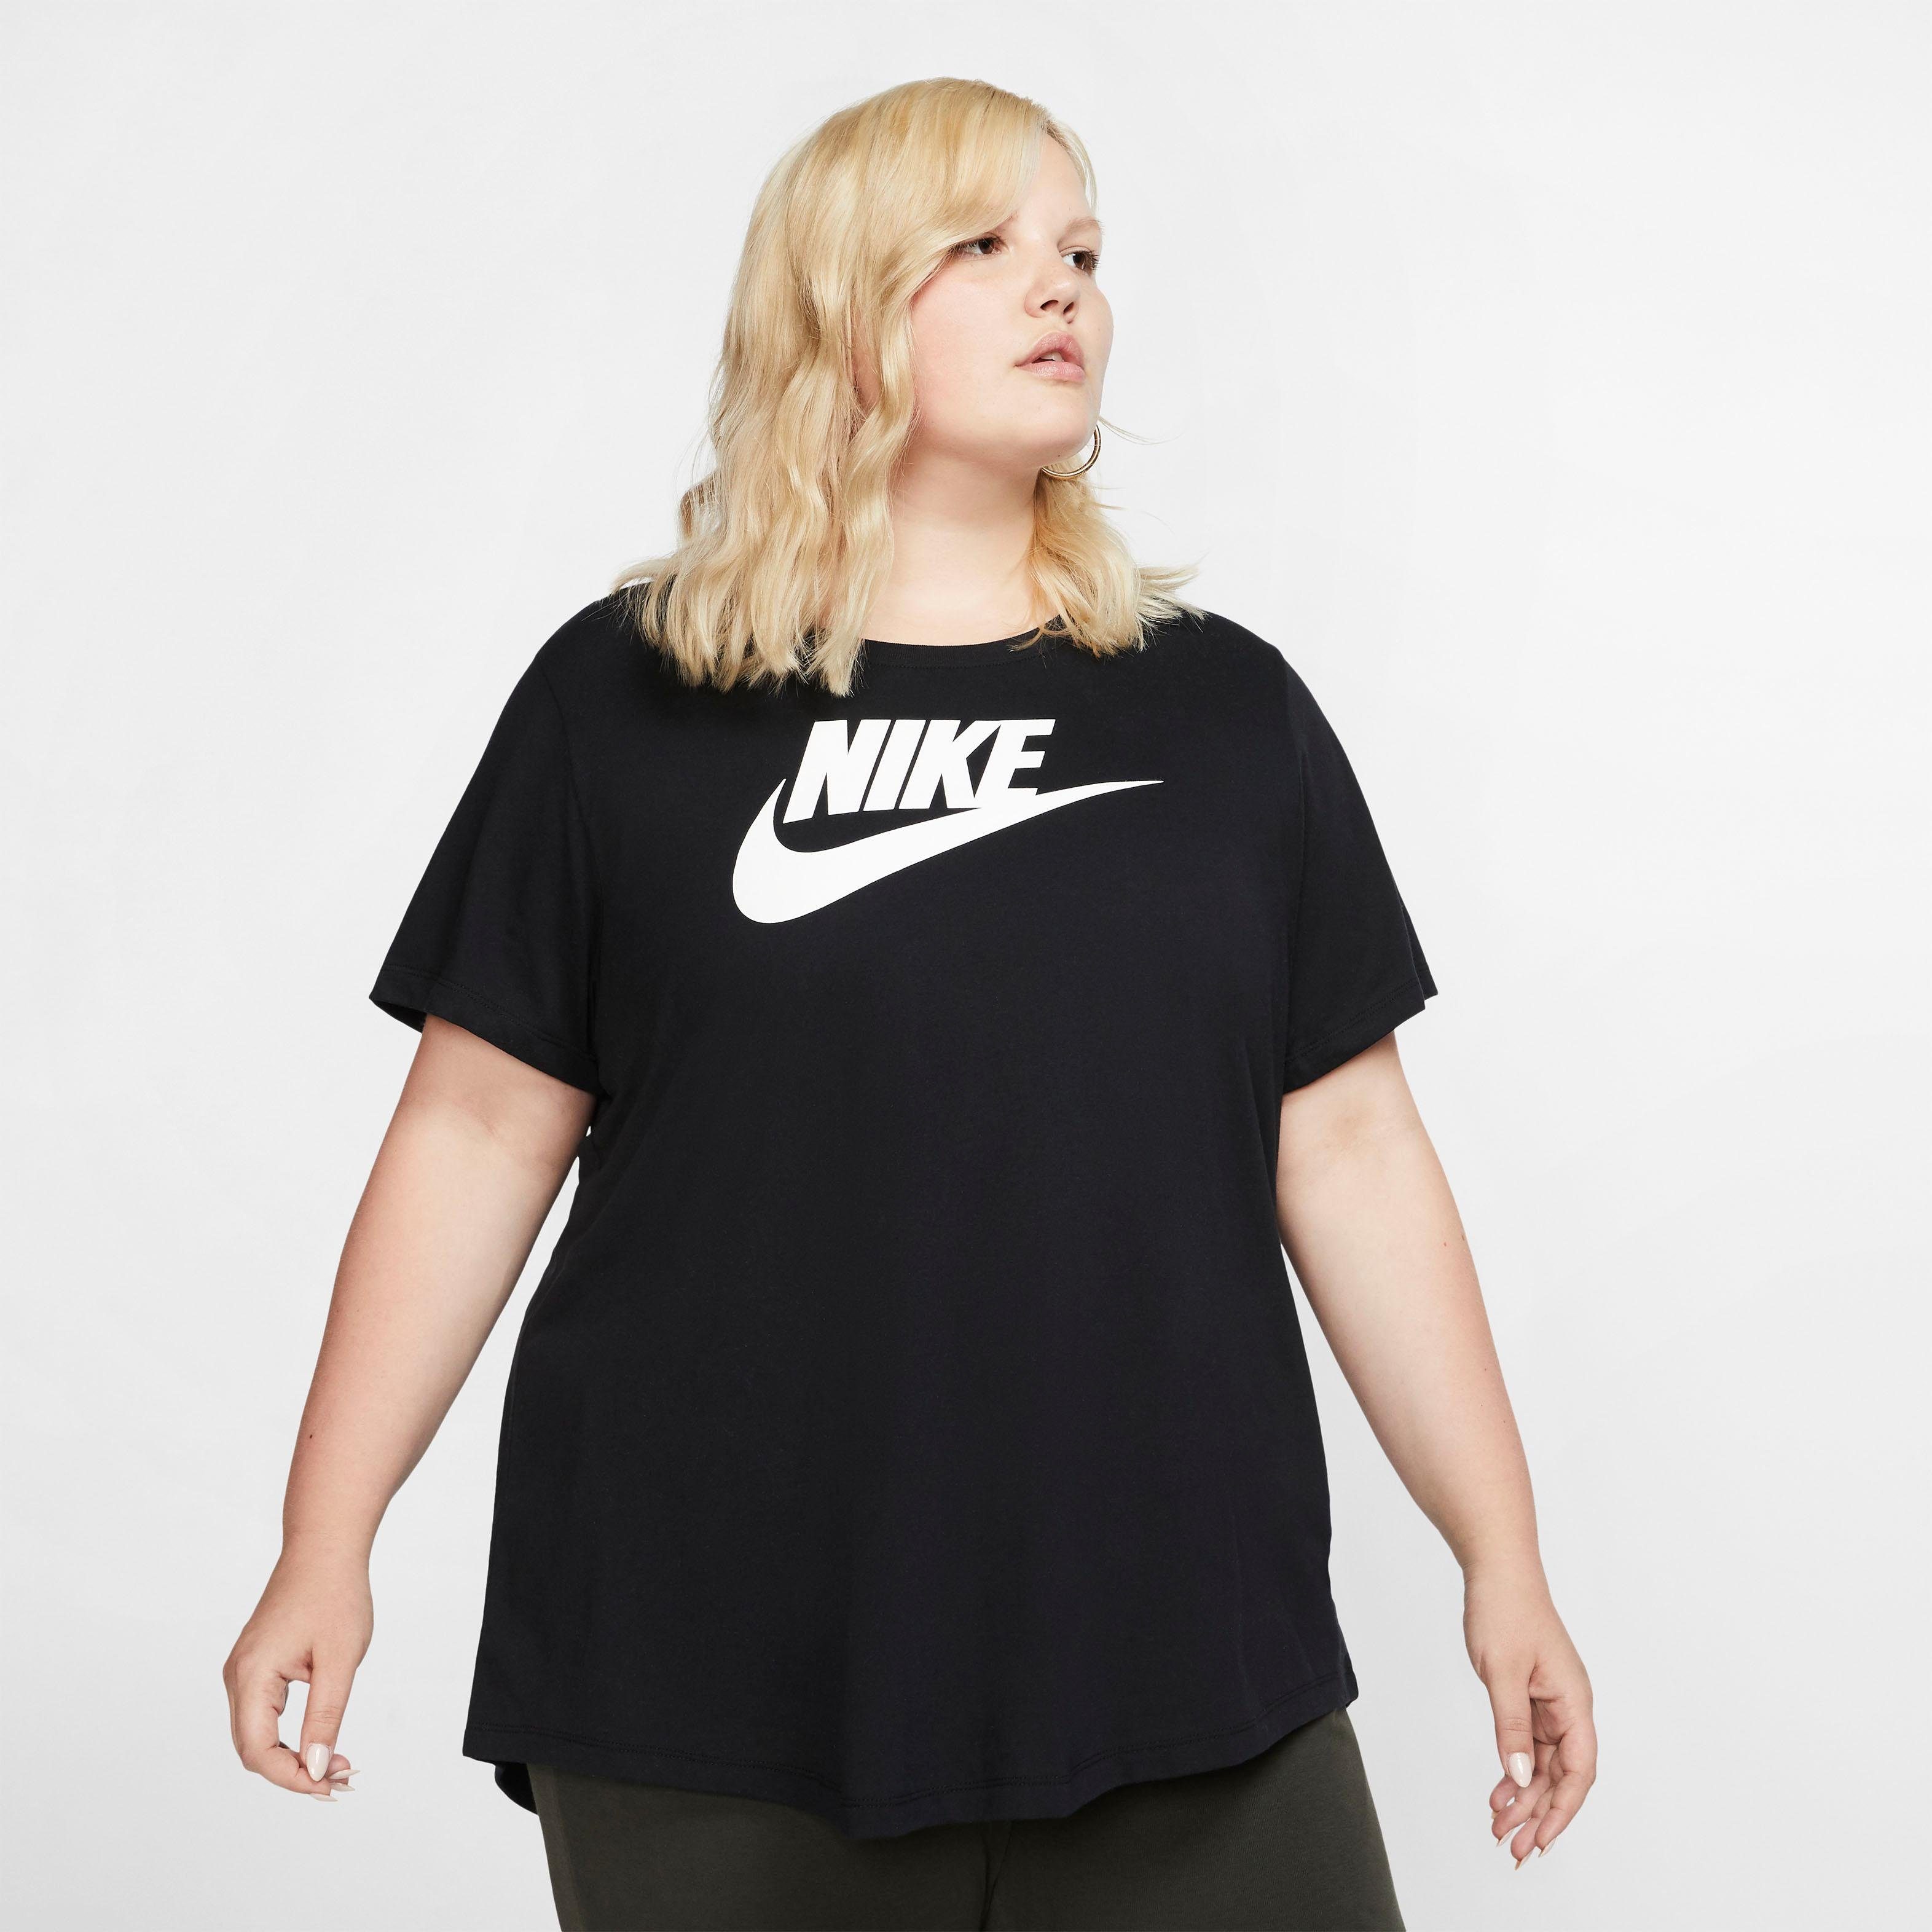 Nike Sport T-Shirts & Trainings T-Shirt online kaufen | OTTO